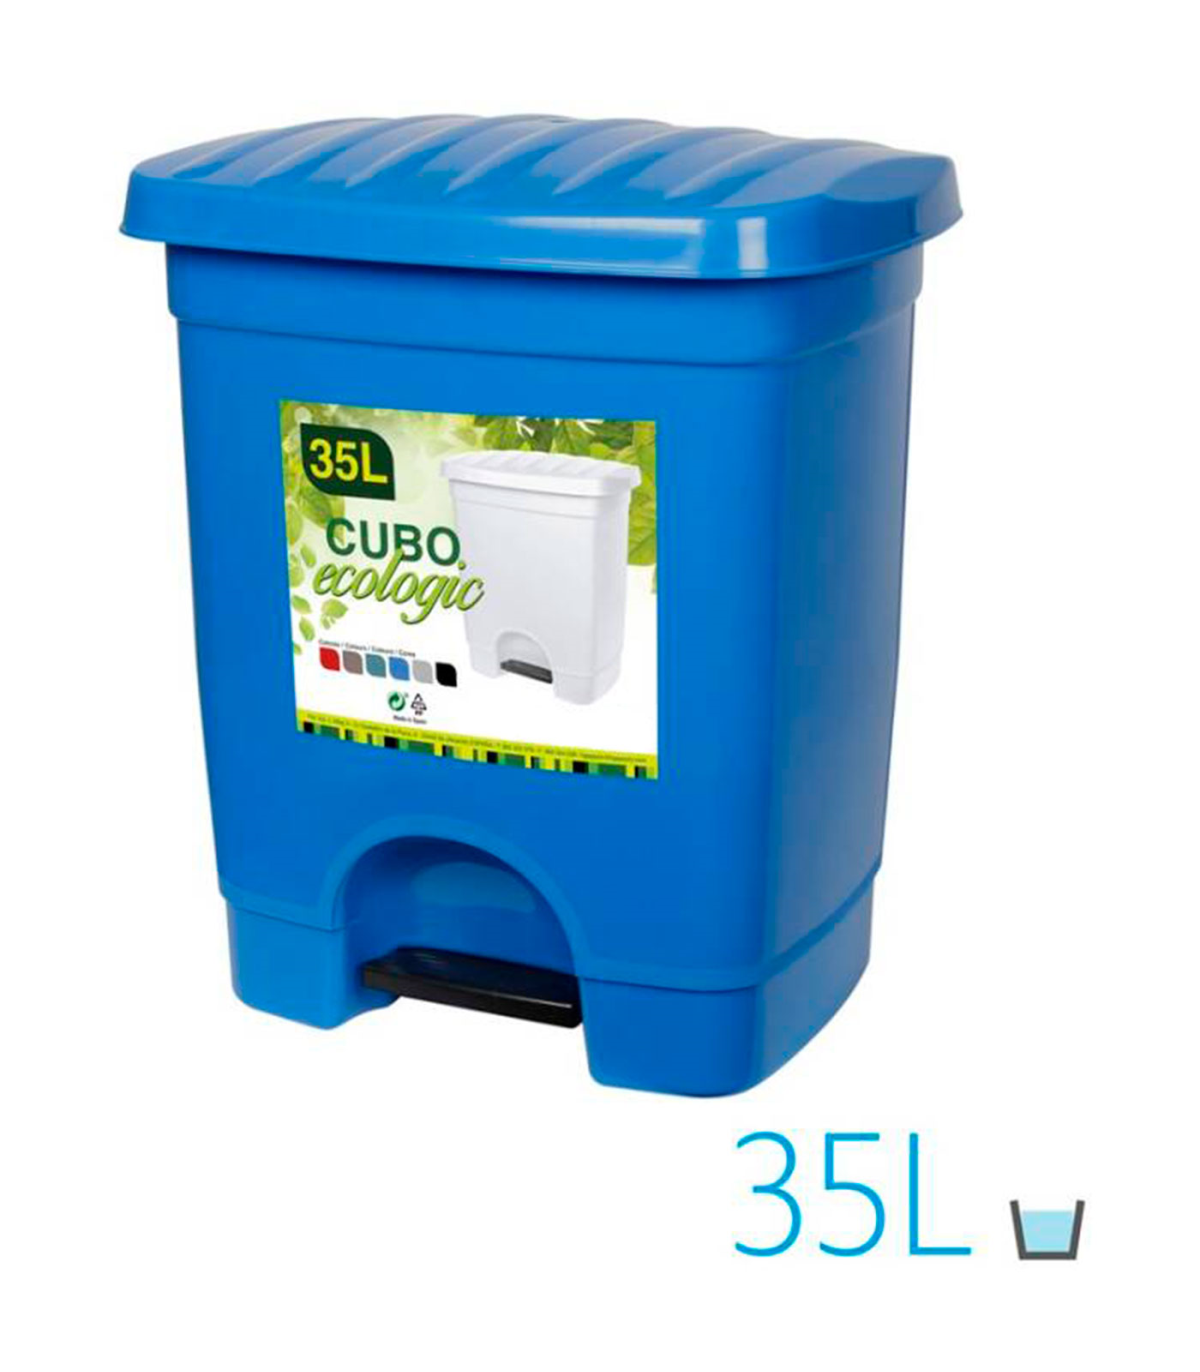 Tradineur - Cubo de basura de plástico con pedal y con 1 compartimento,  contenedor de residuos, papelera, cocina, fabricado en E